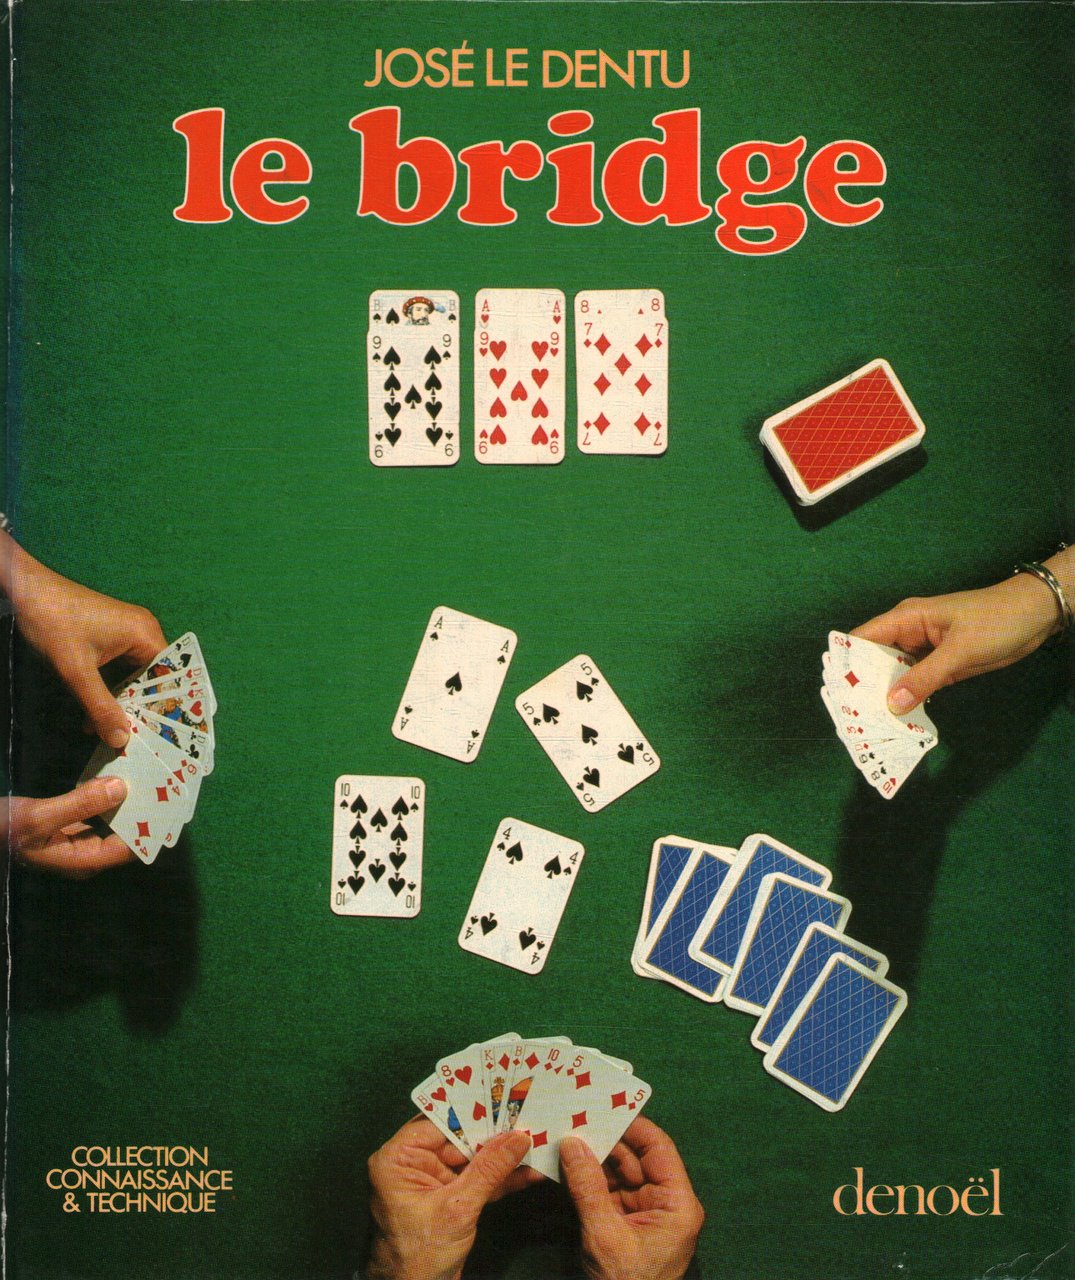 Le bridge